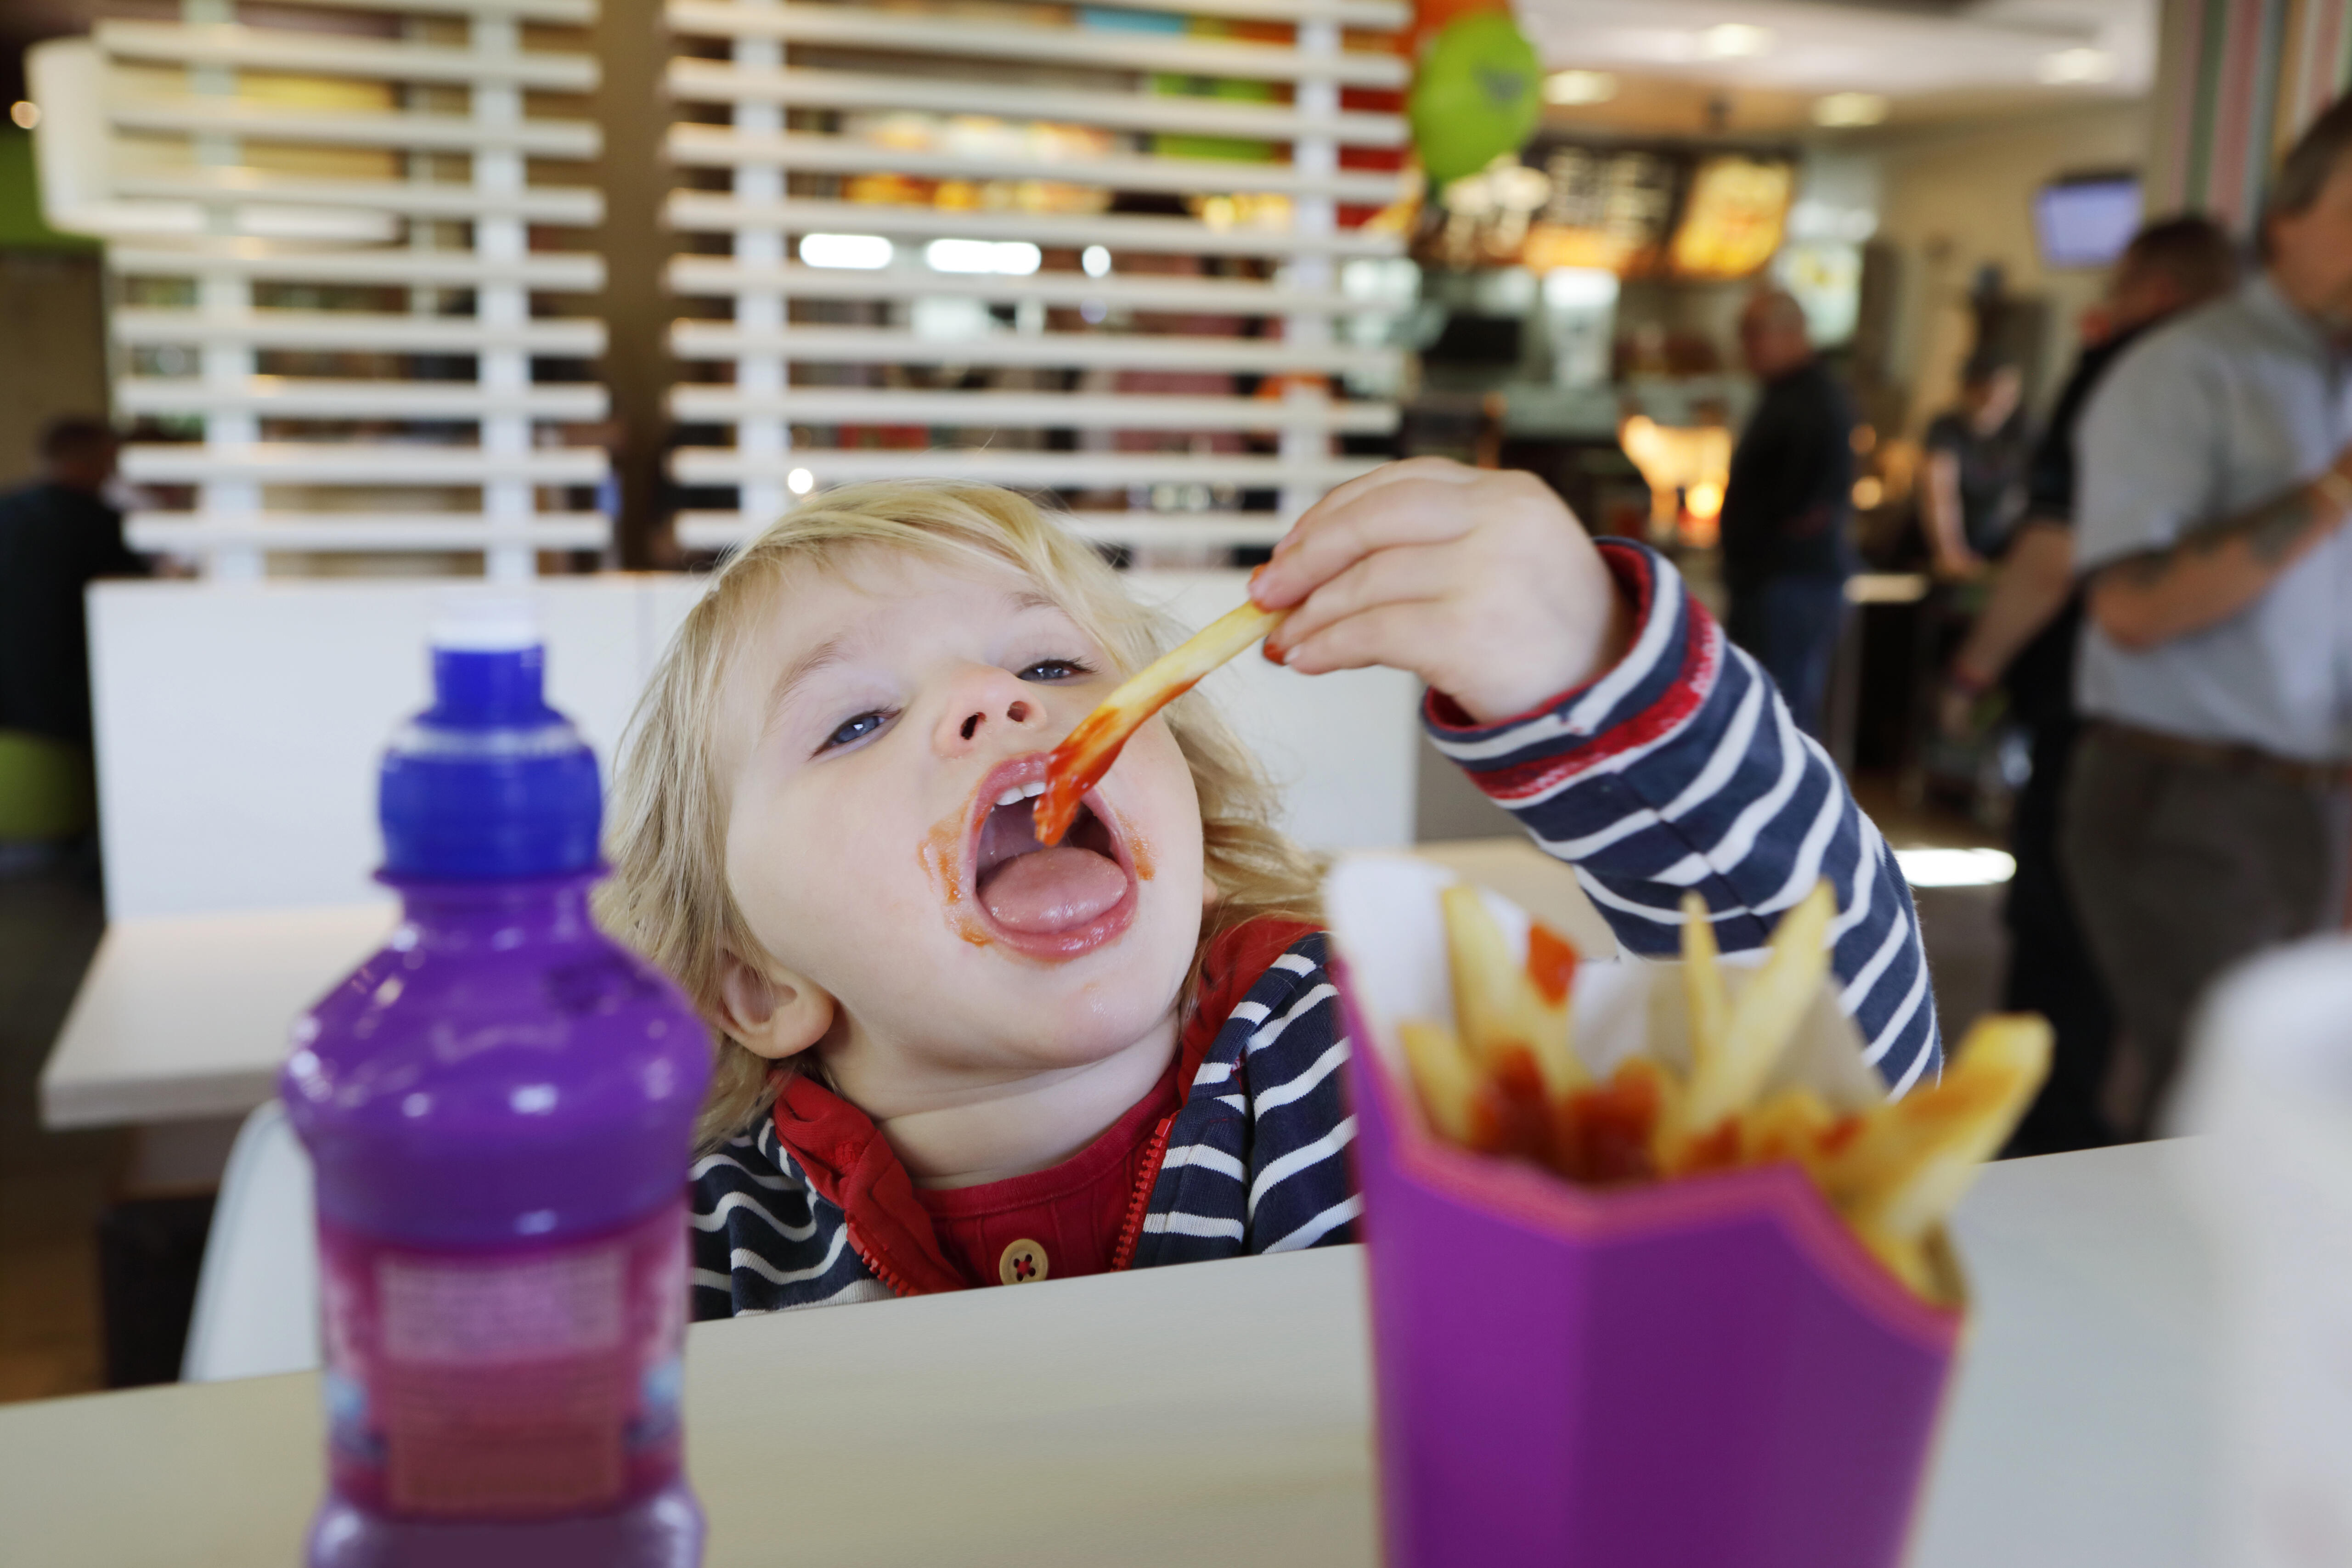 Restaurant Bans Children From Dining Room